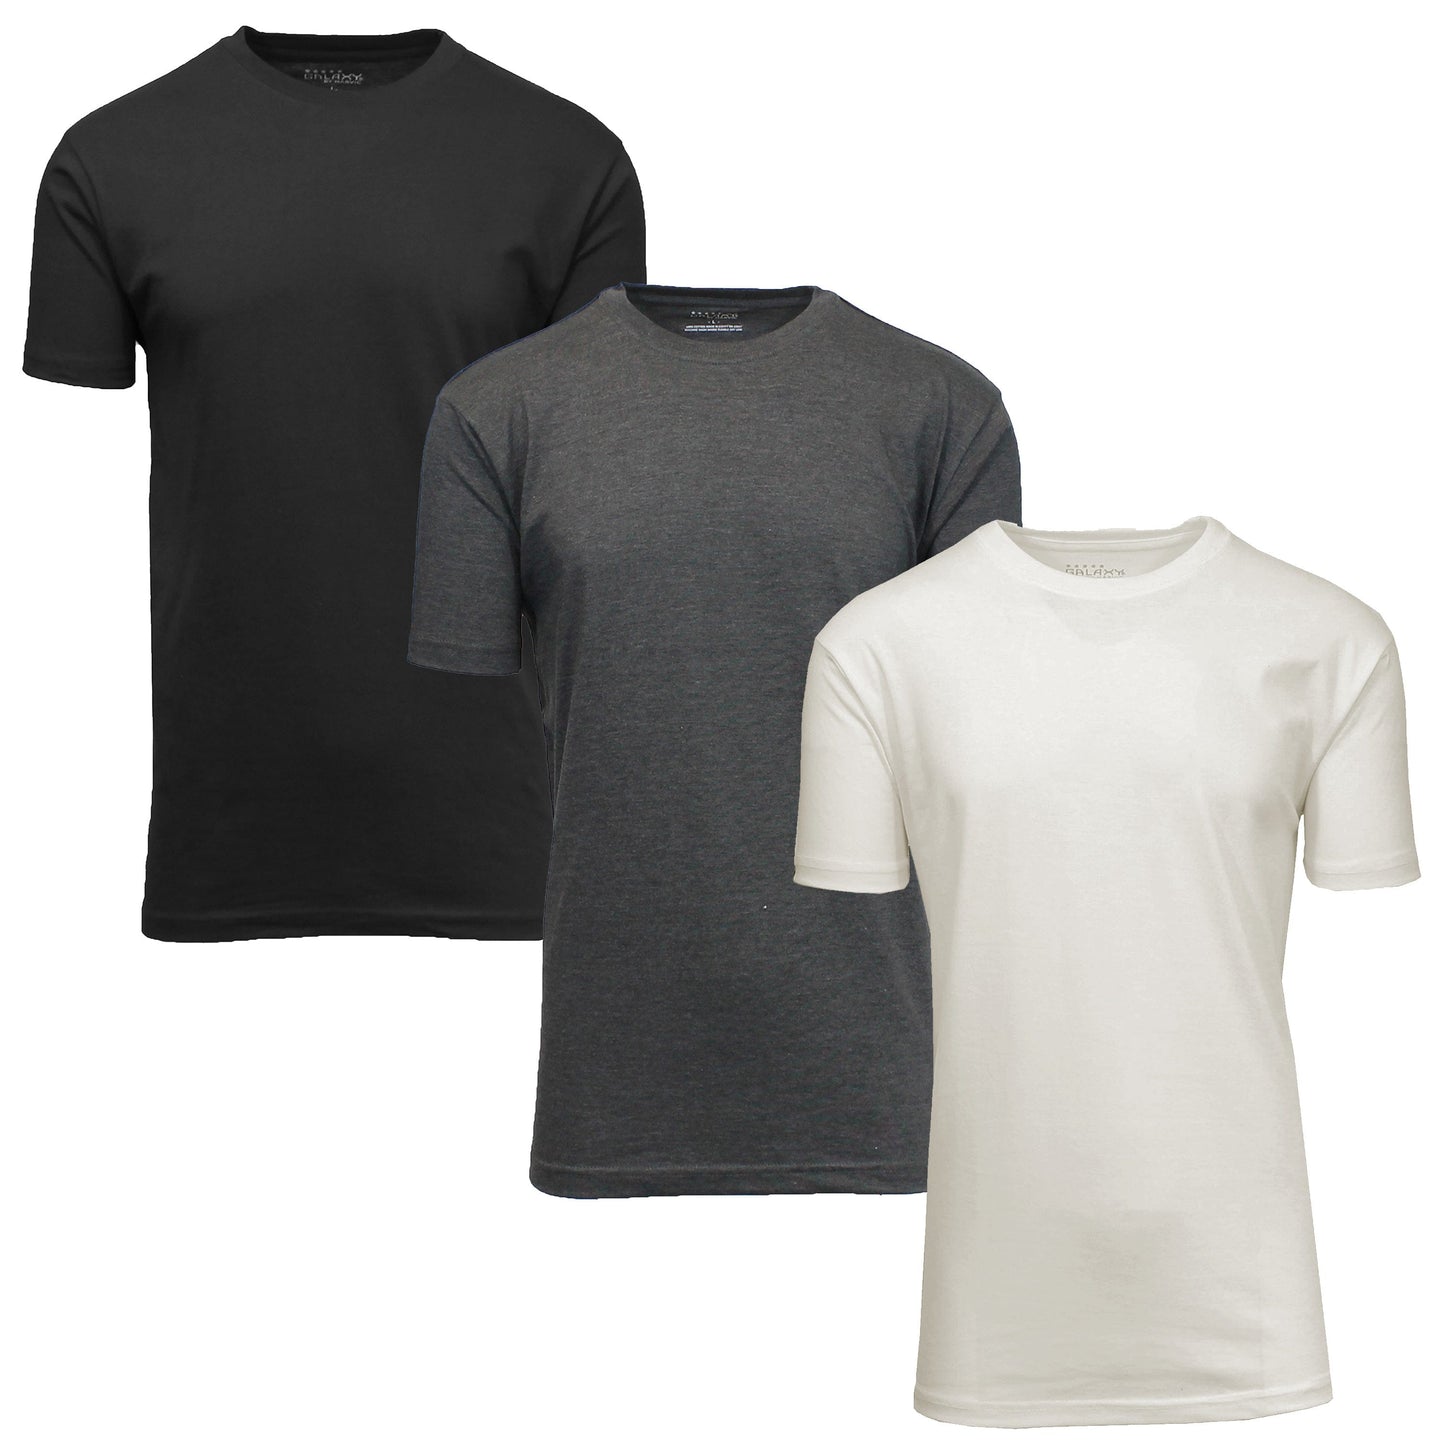 Camiseta clásica de mezcla de algodón de manga corta con cuello redondo para hombre (S-3XL), paquete de 3